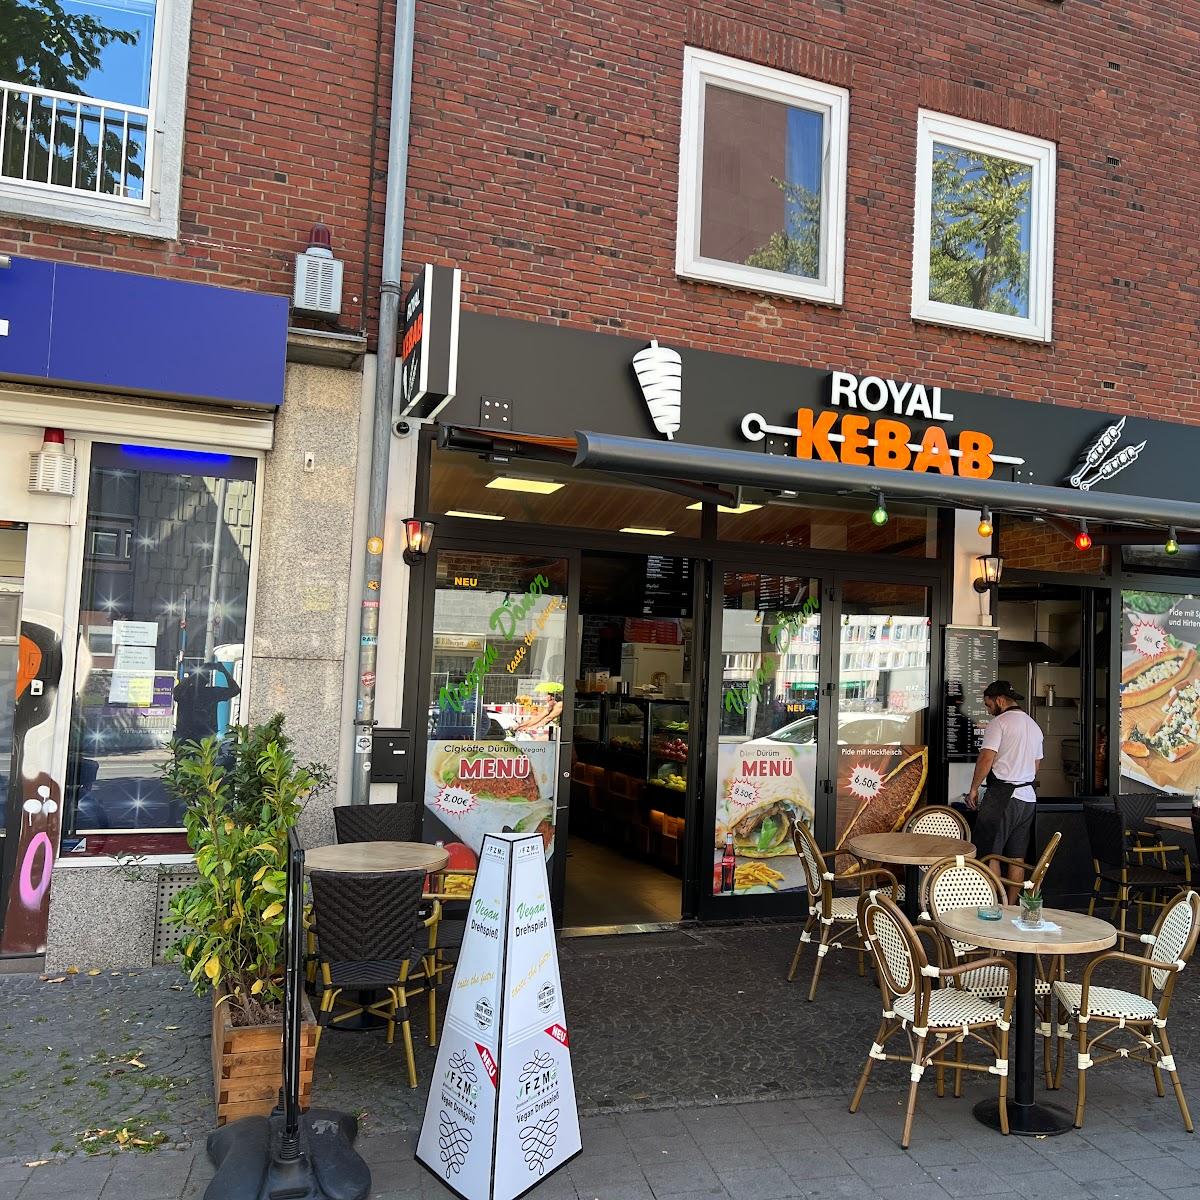 Restaurant "Royal Kebab" in Münster